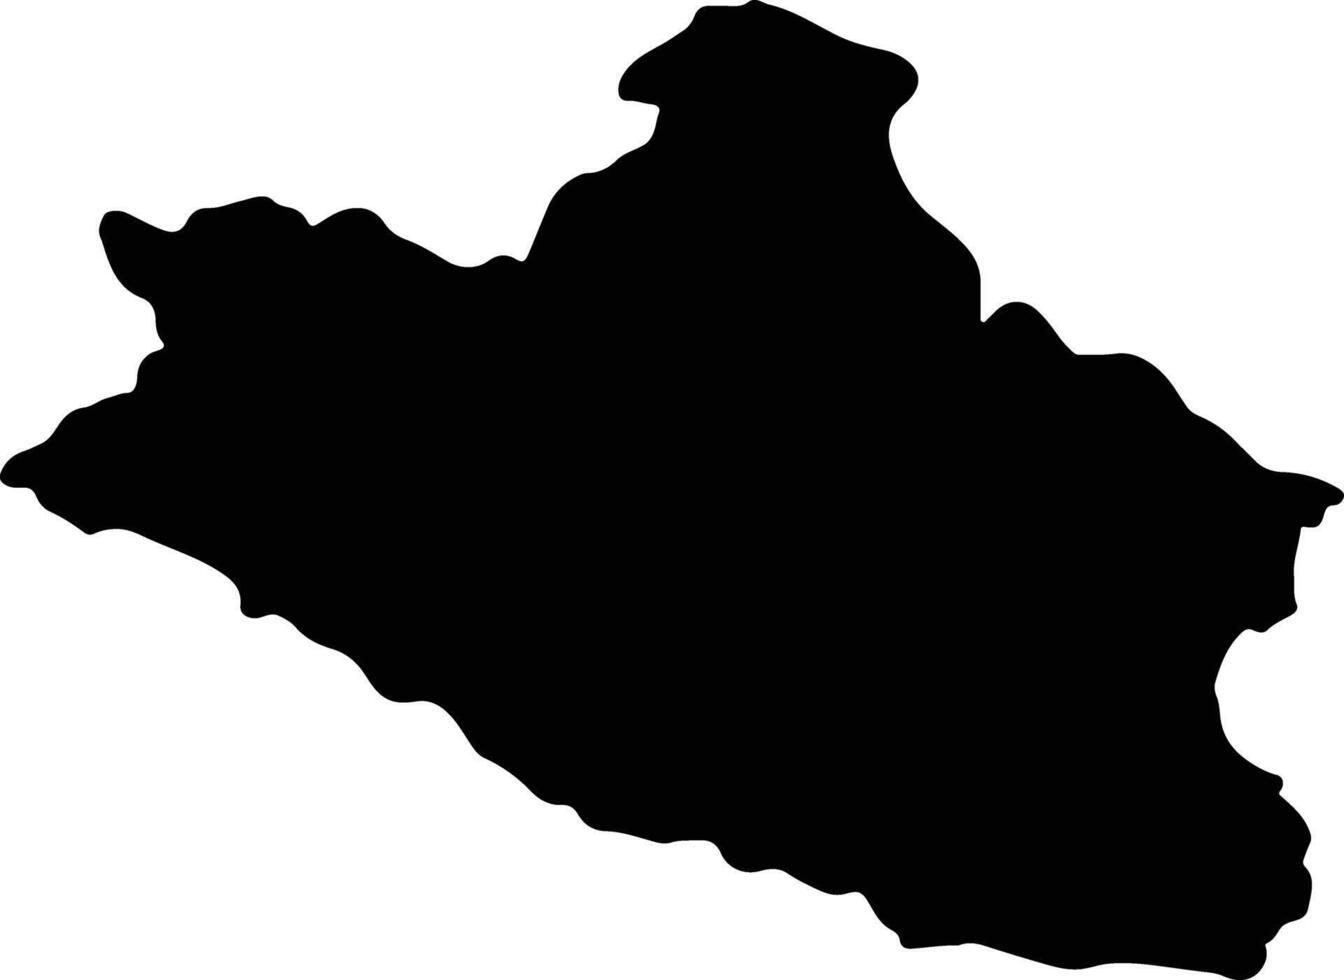 nghe un Vietnam silhouette carta geografica vettore